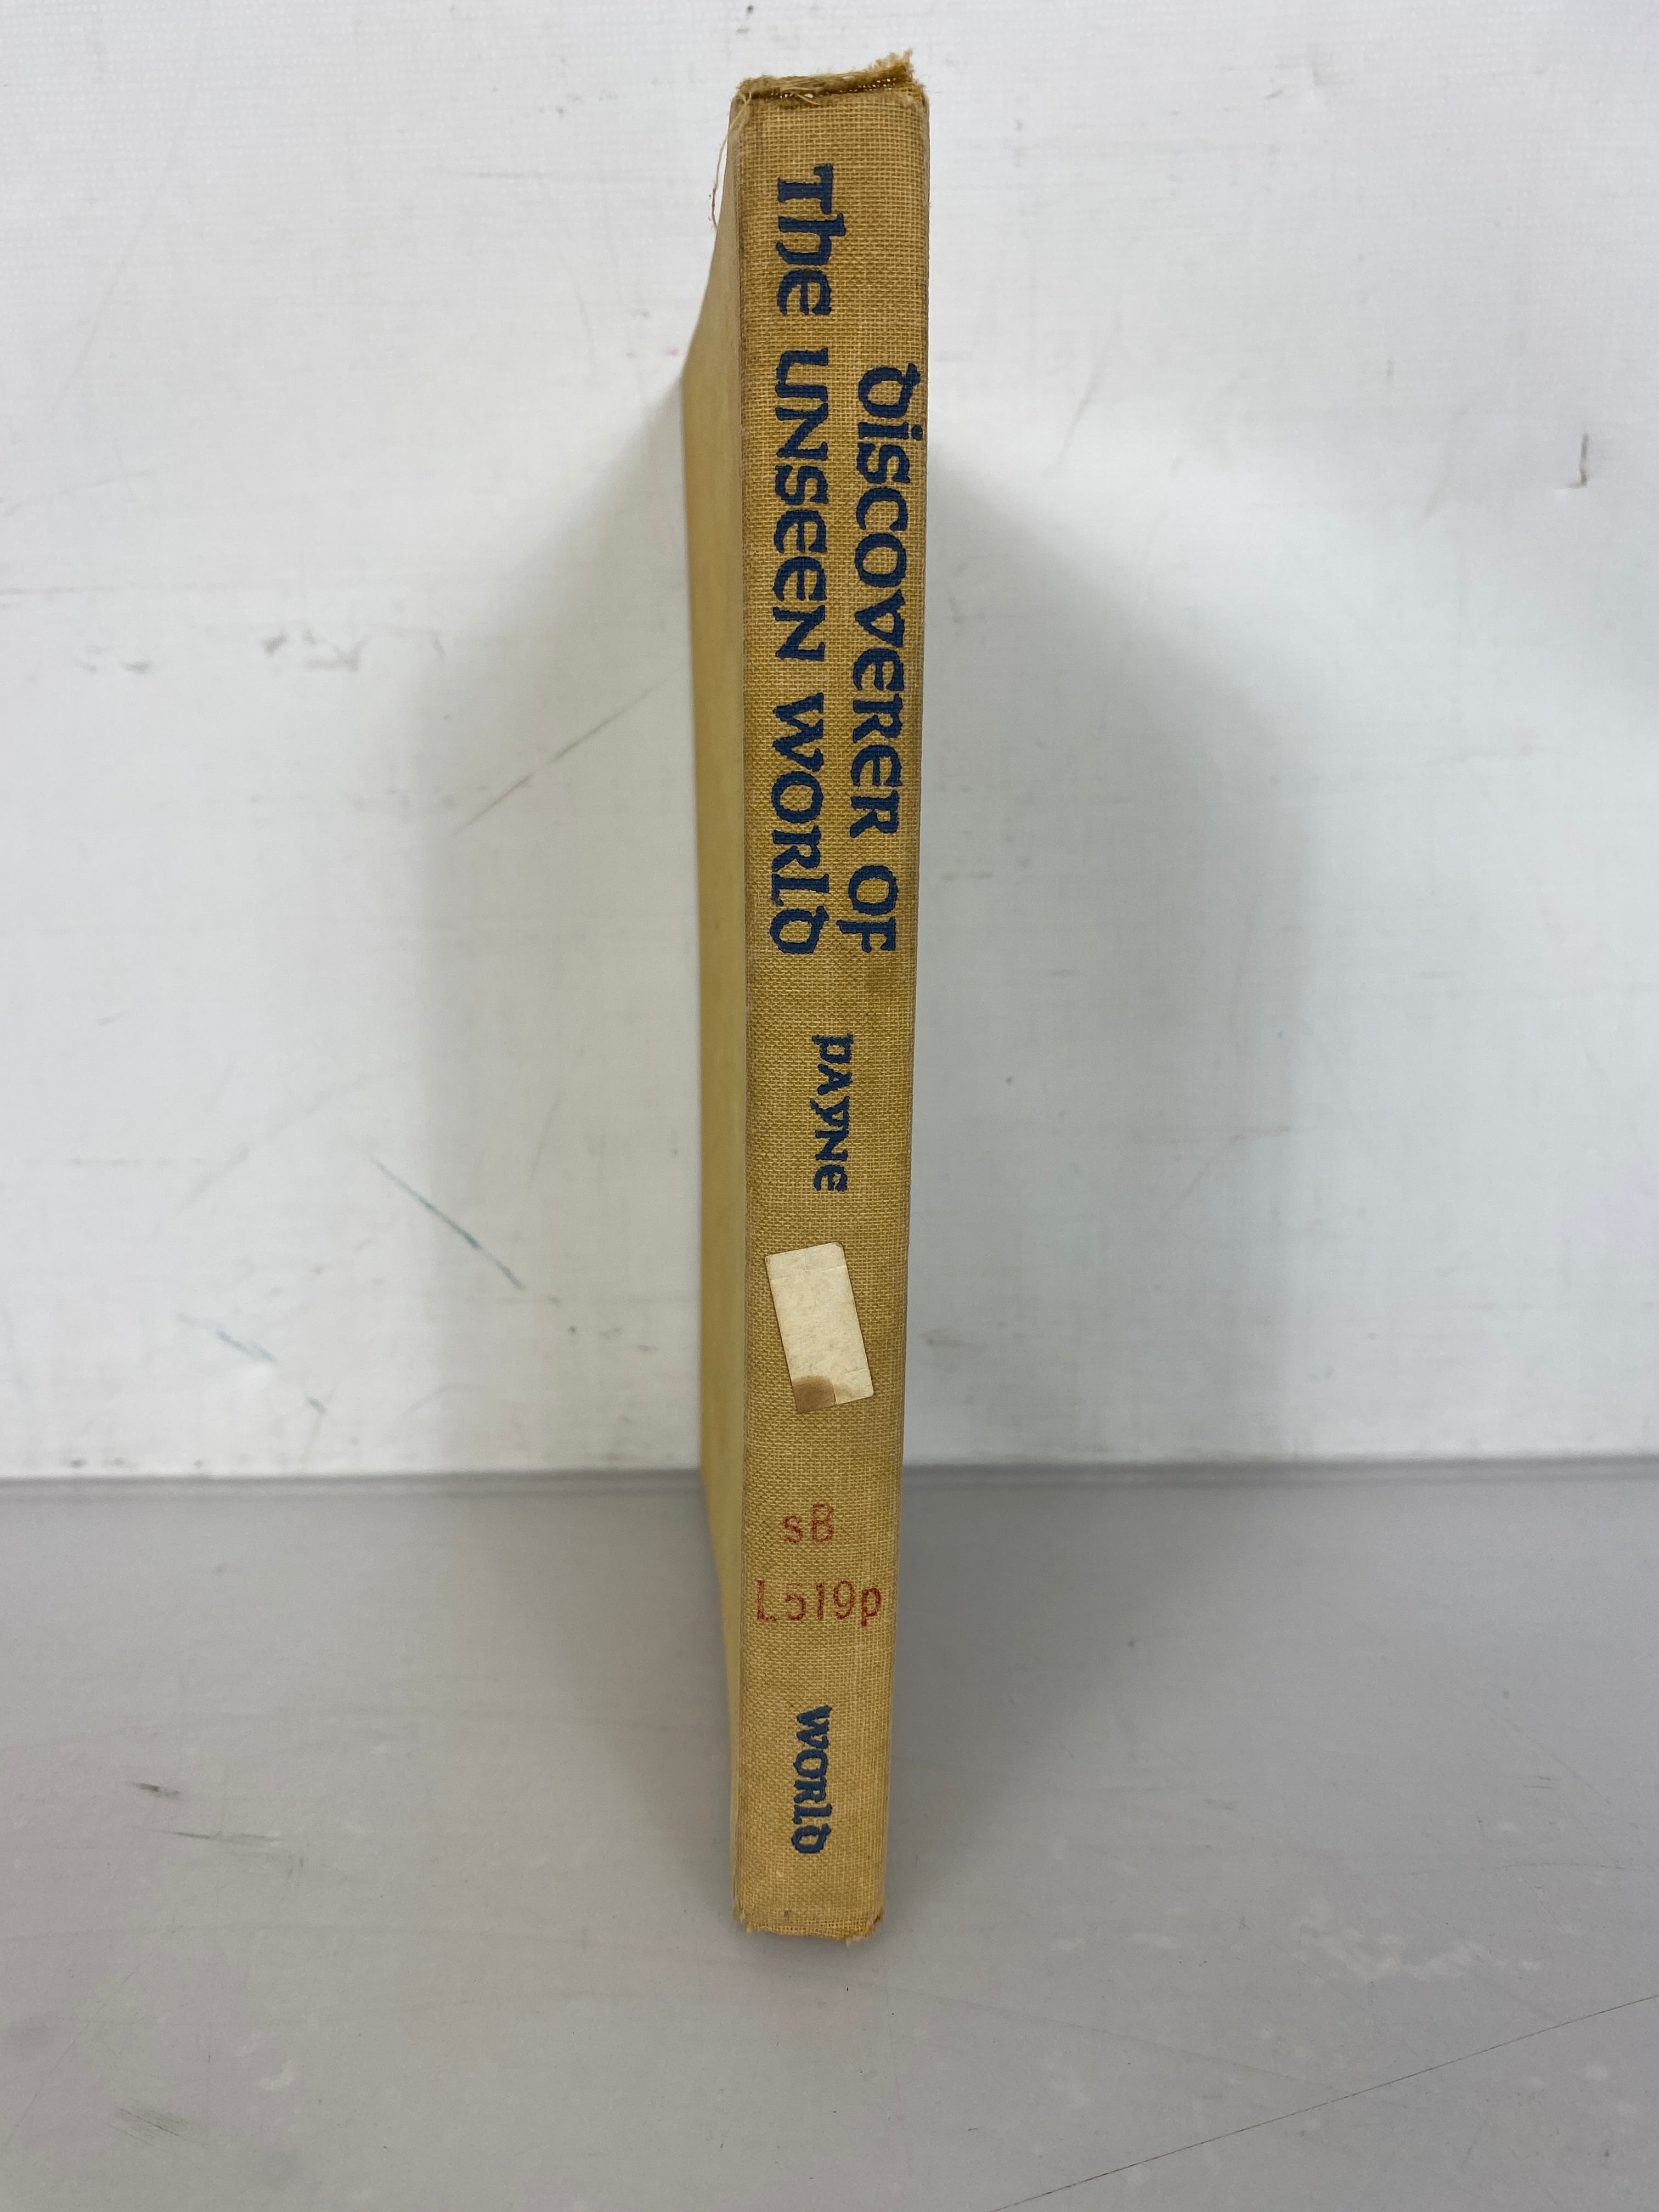 Discoverer of the Unseen World Biography of Antoni van Leeuwenhoek Payne 1966 HC